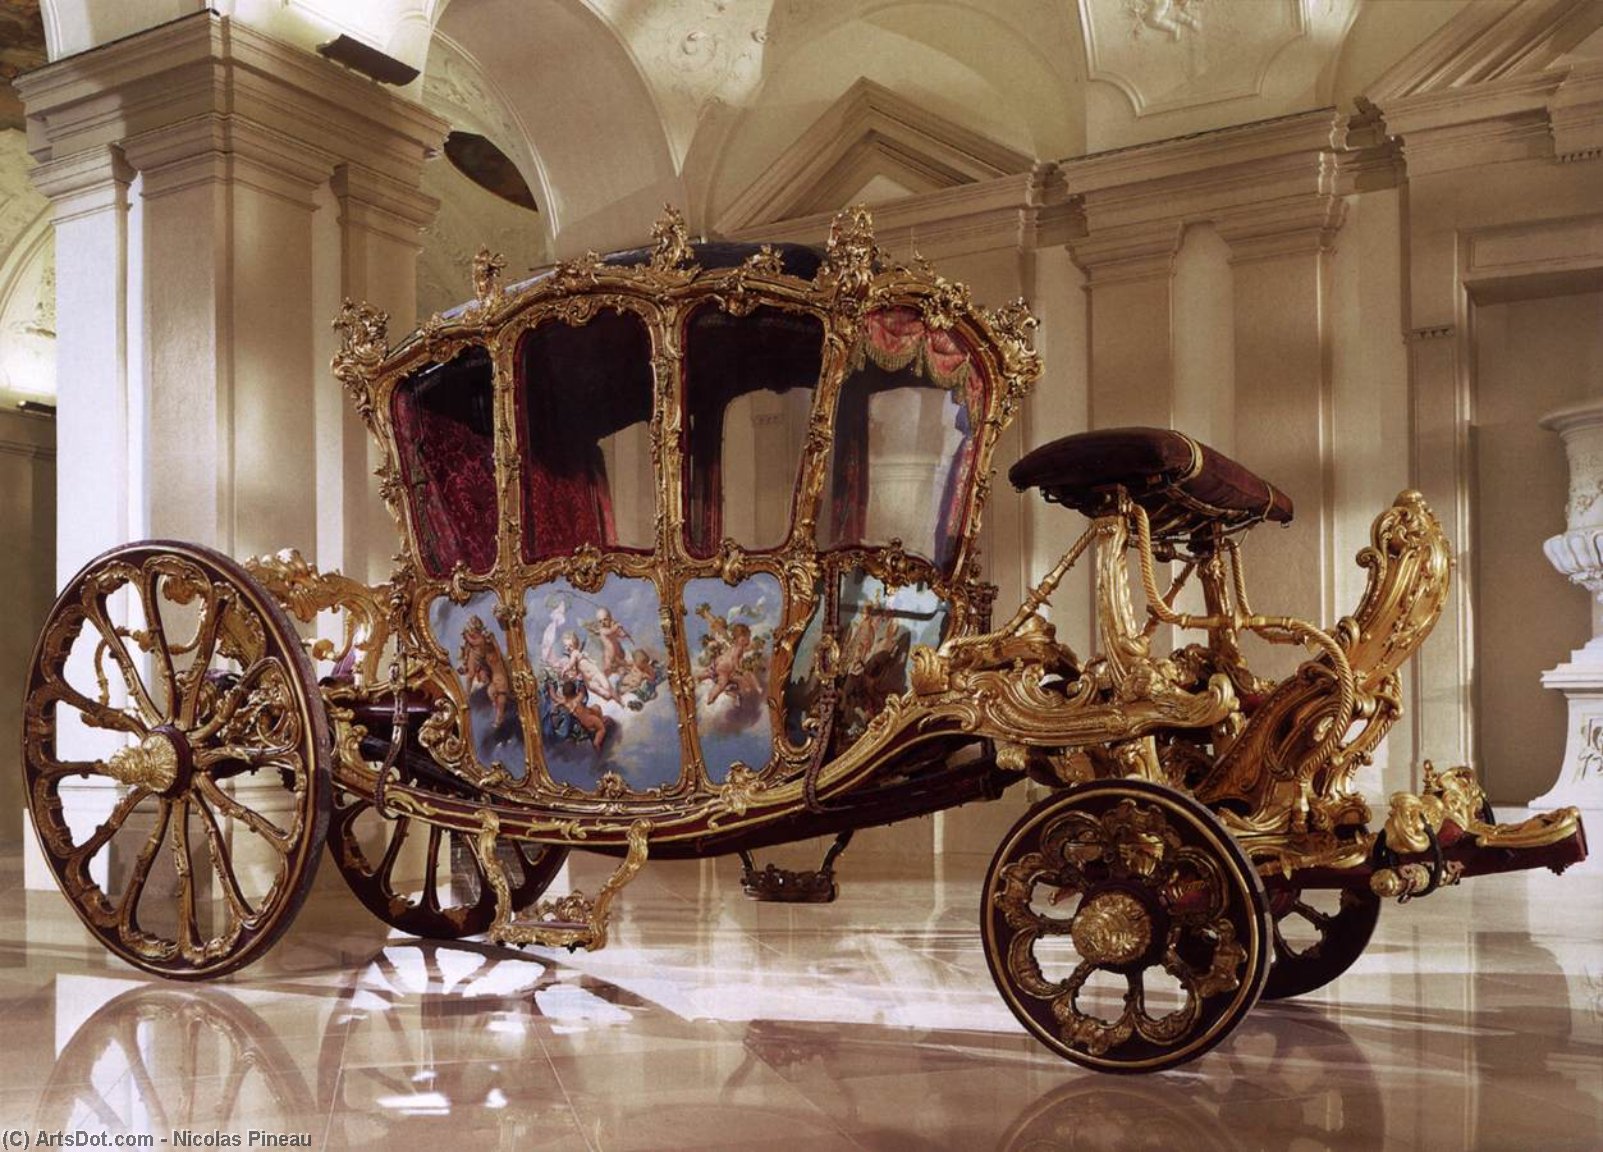 Карета. Королевская карета Франции 19 века. Кареты 17 века во Франции. Карета короля Франции 1840. Карета рококо.